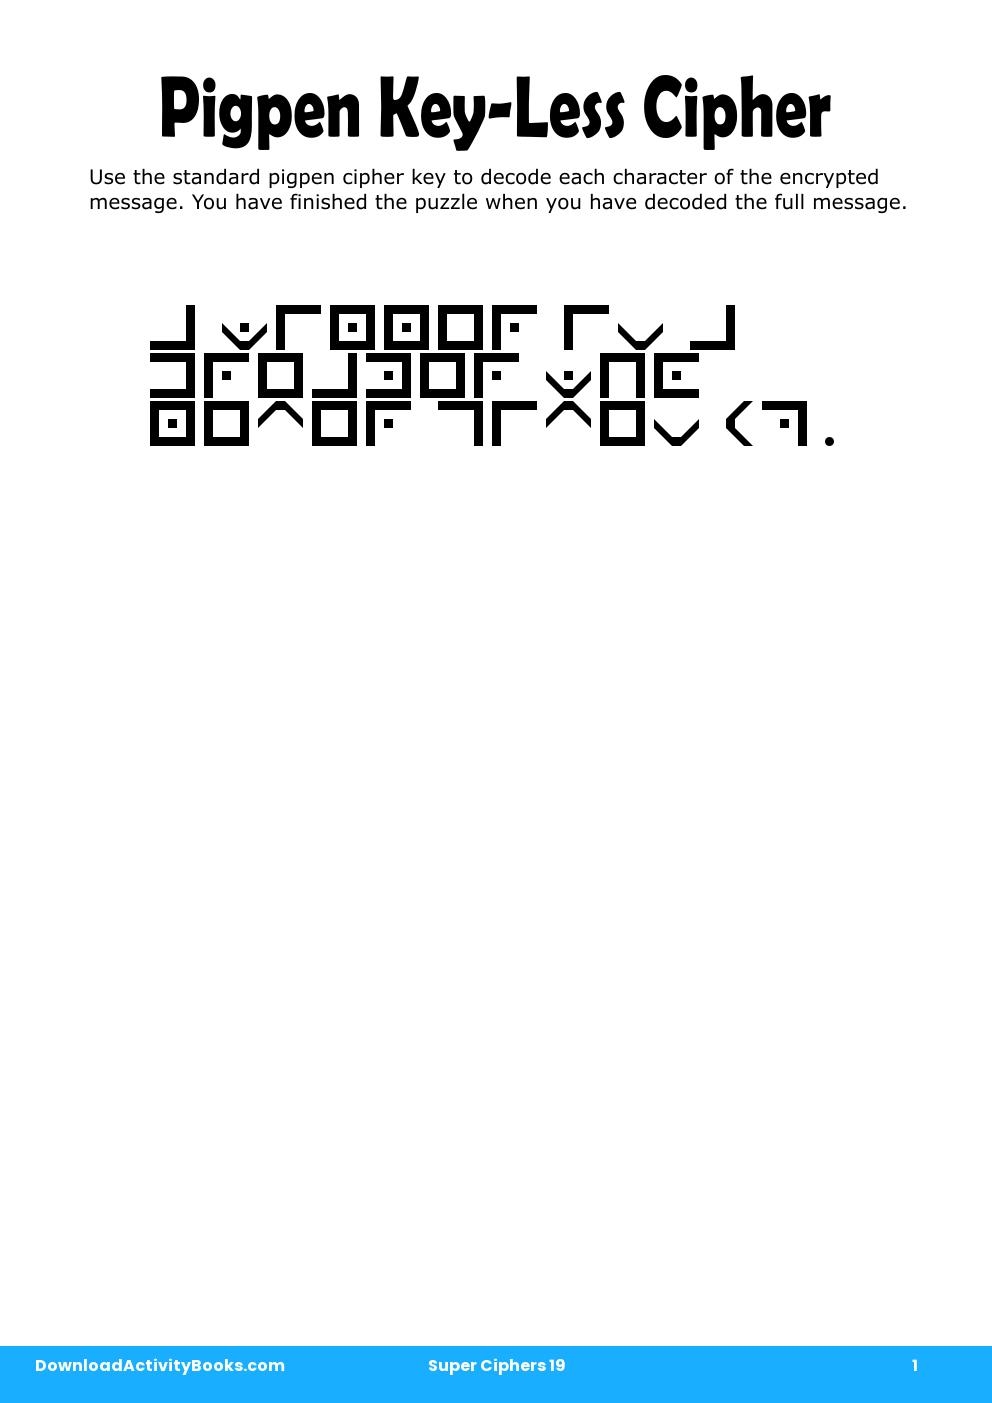 Pigpen Cipher in Super Ciphers 19